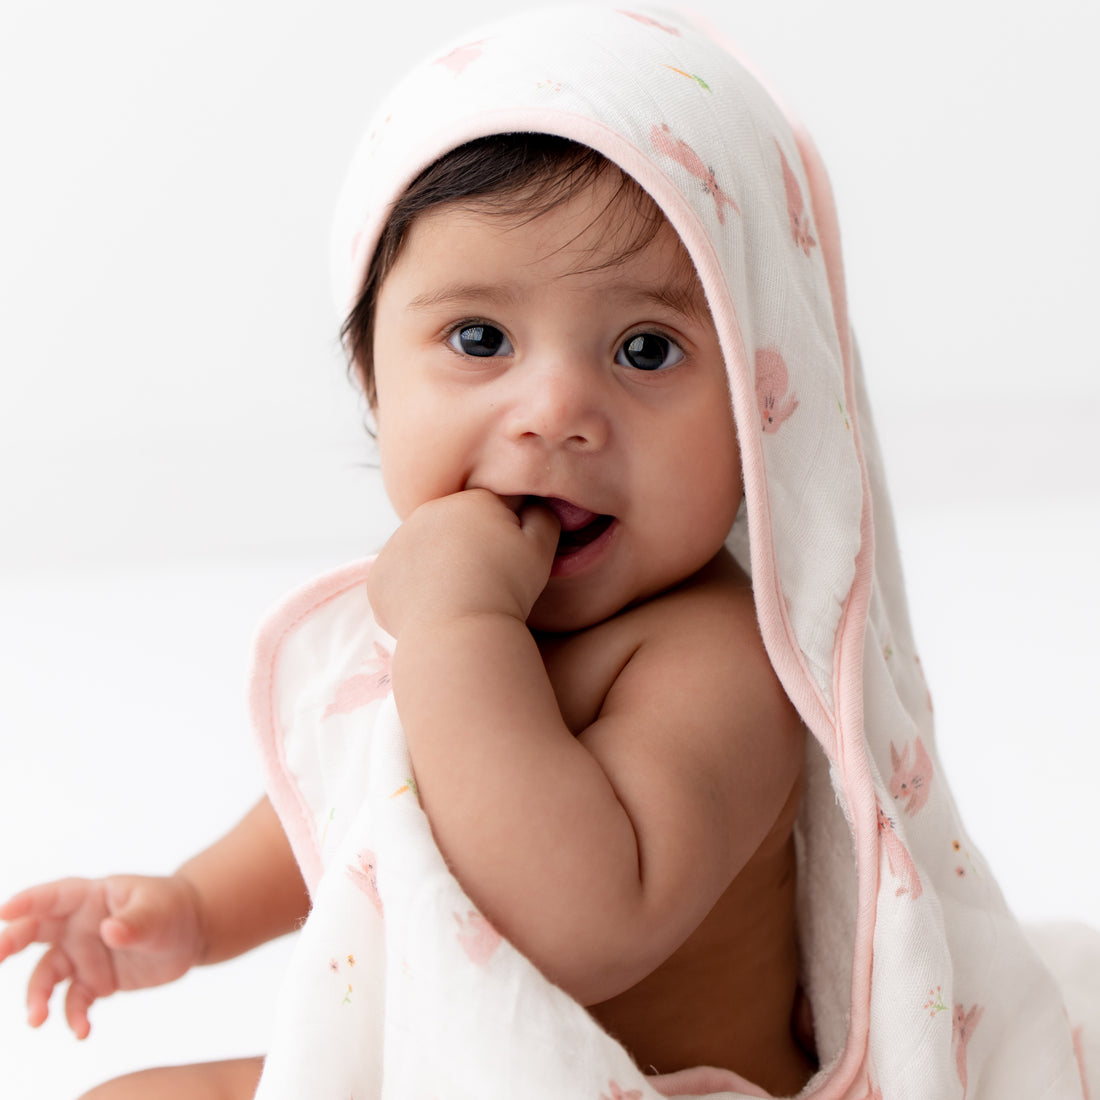 10 Baby Shower Gift Ideas